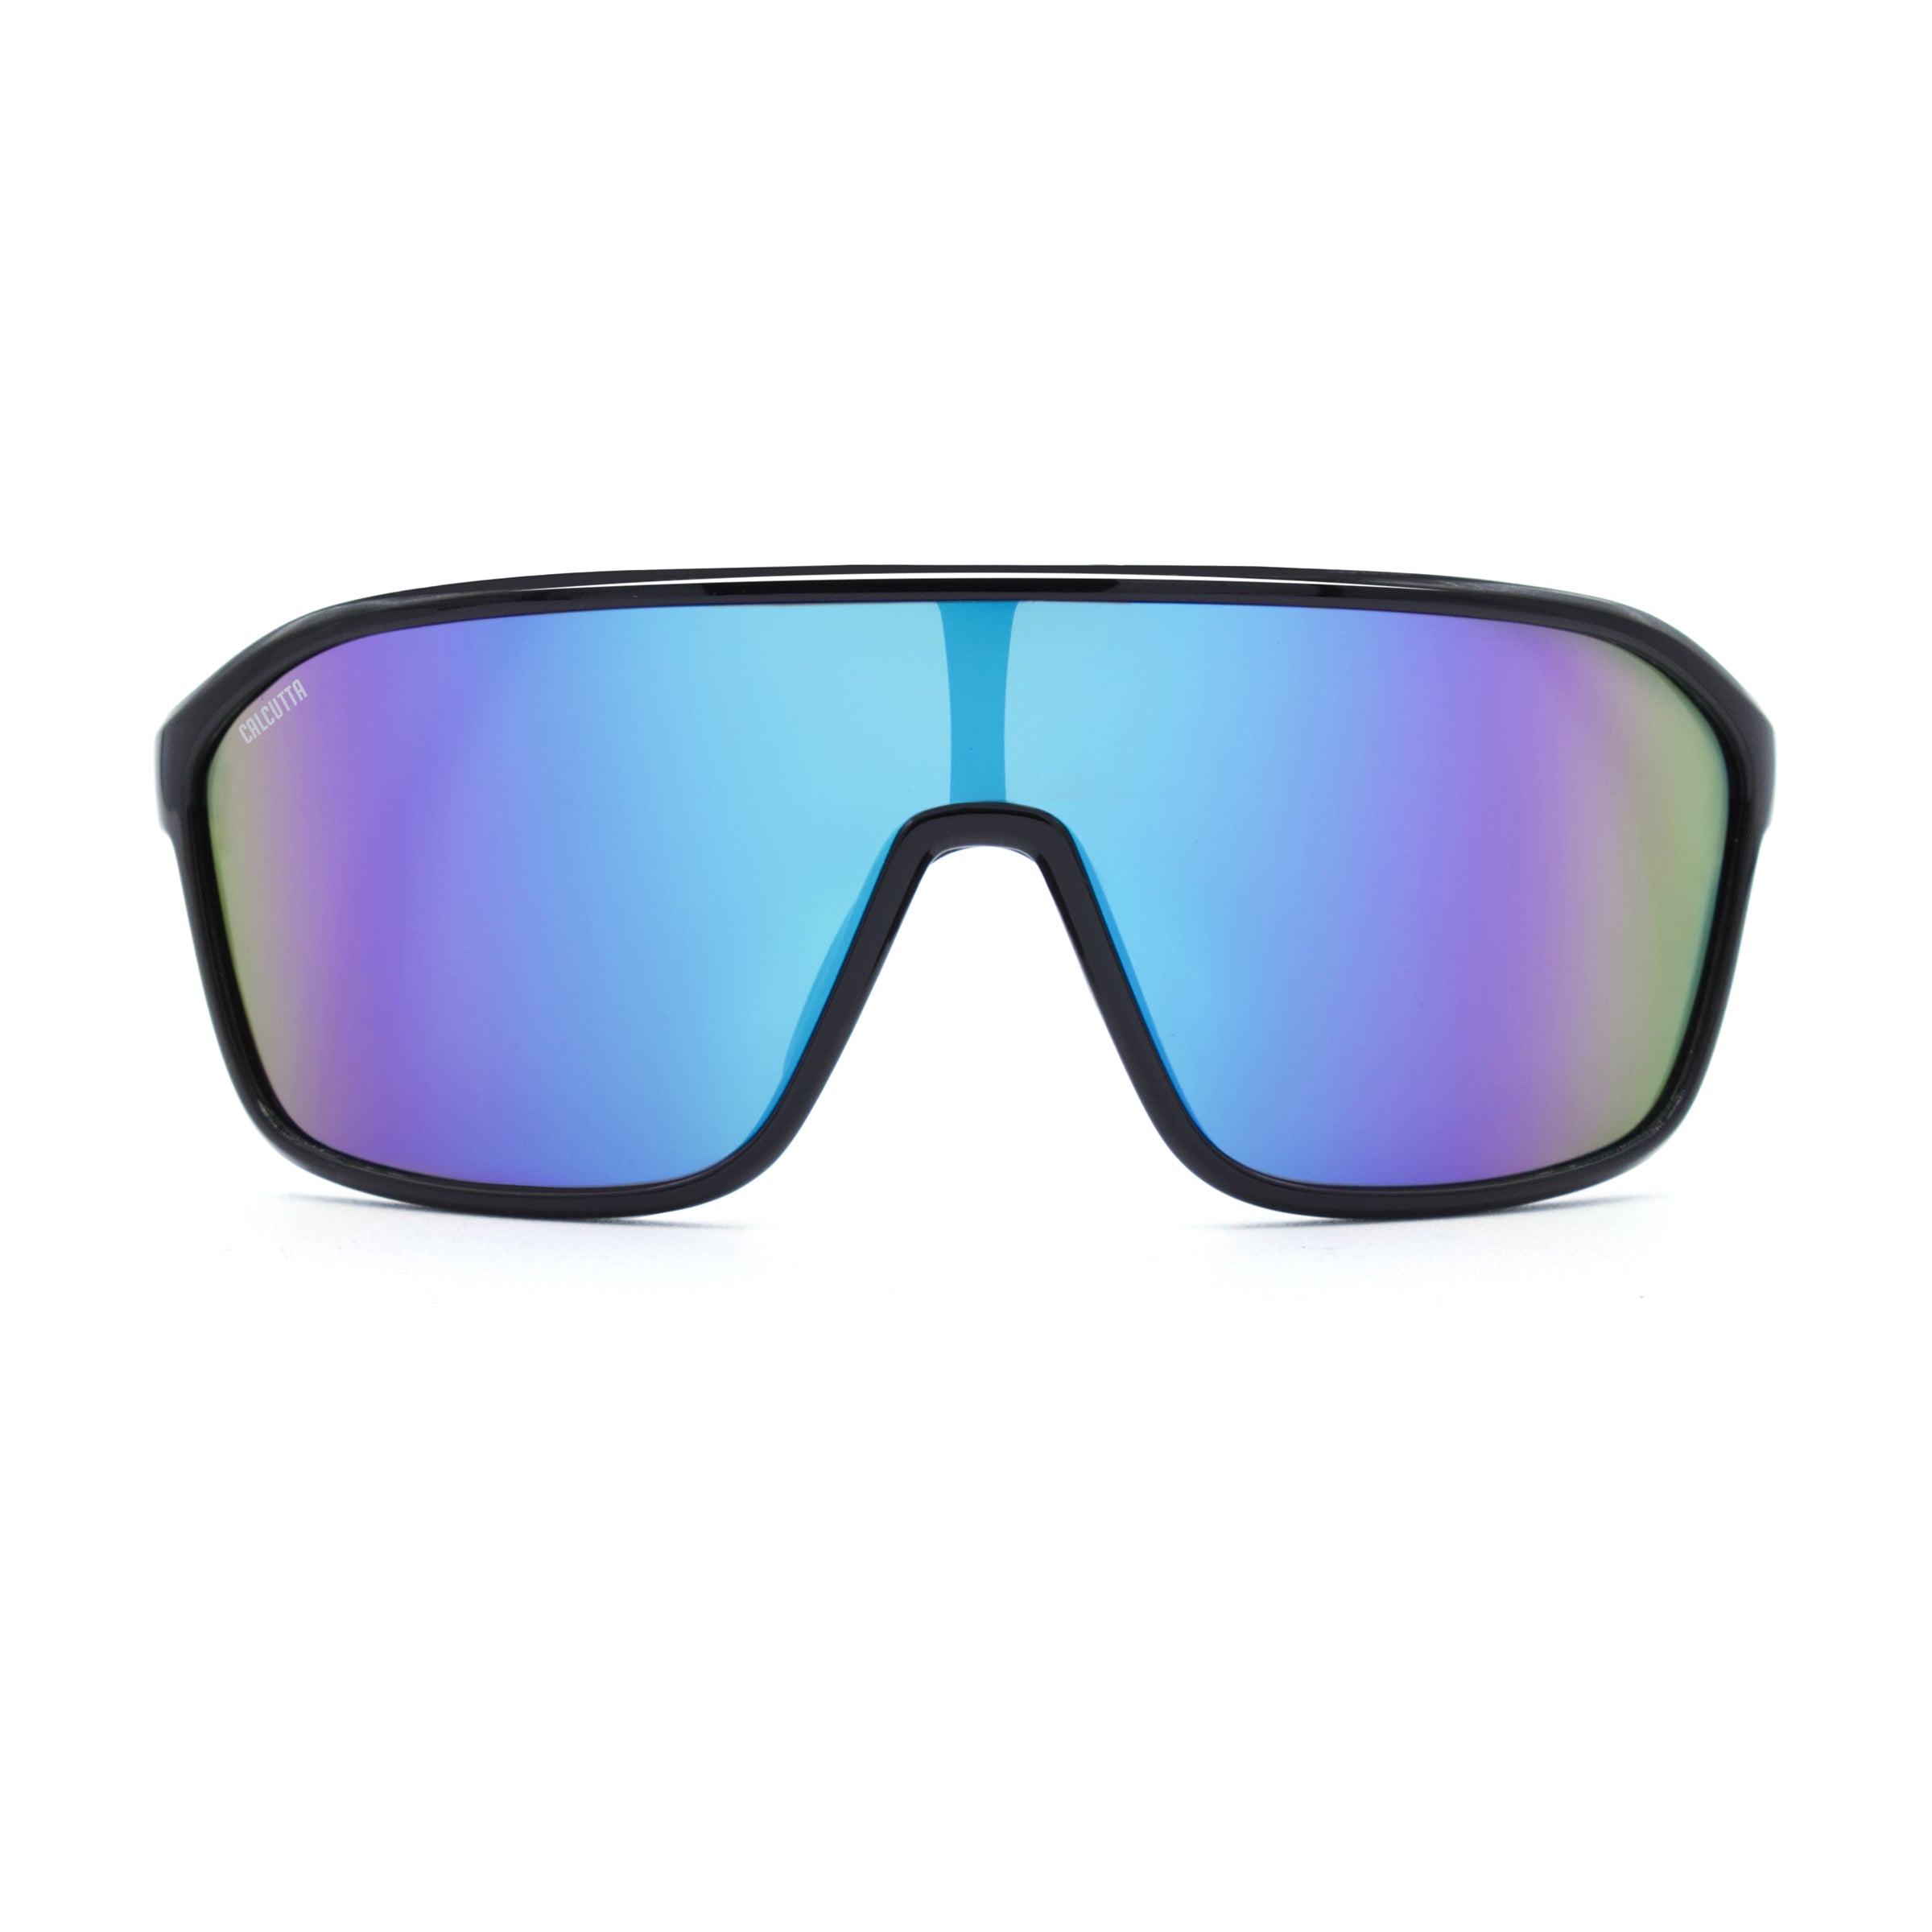 Calcutta Raptor sunglasses blue mirror lens front